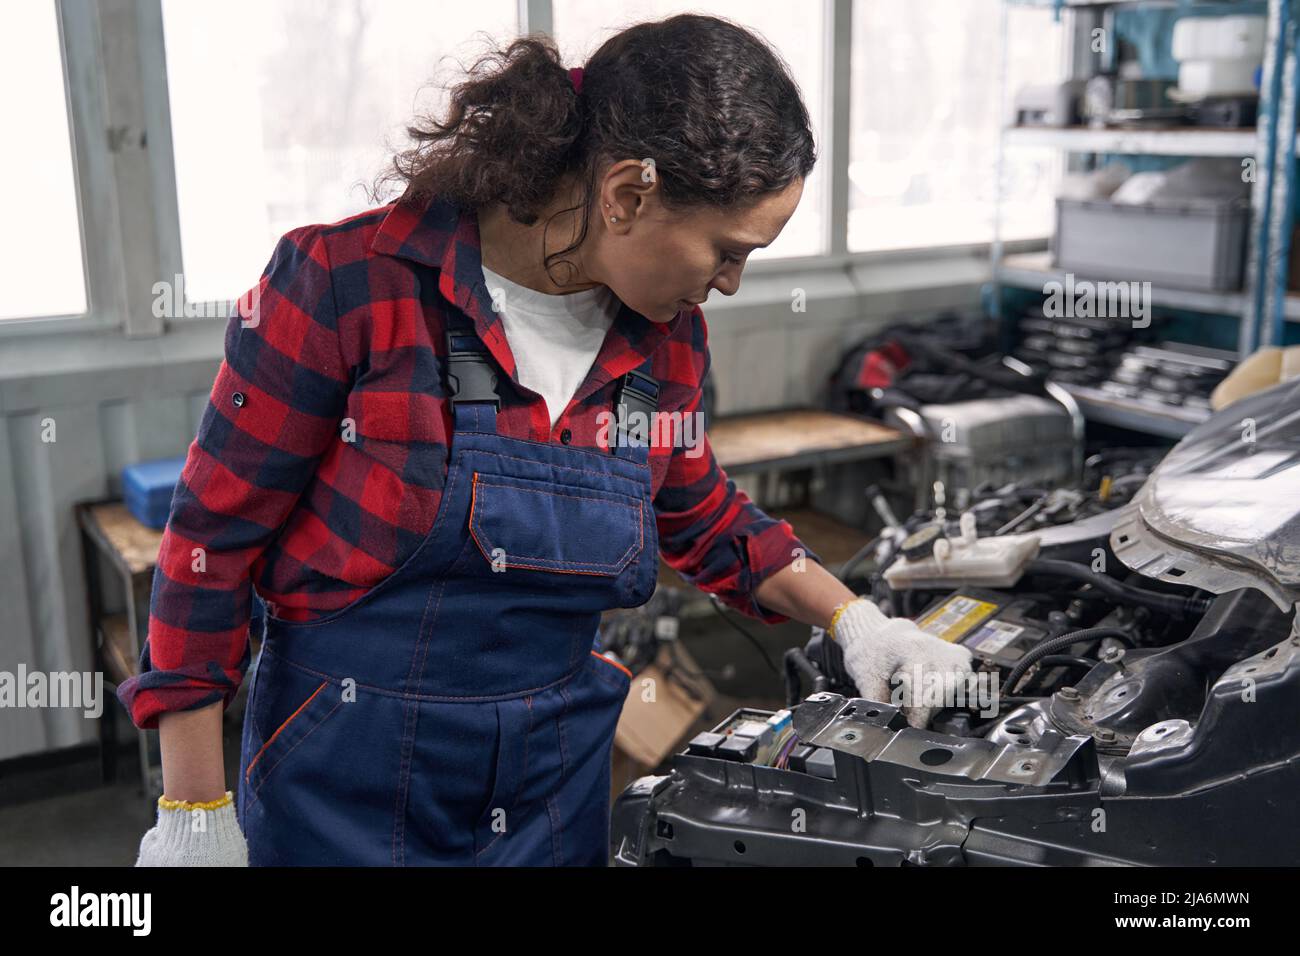 https://c8.alamy.com/comp/2JA6MWN/woman-auto-mechanic-inspecting-car-in-auto-repair-shop-2JA6MWN.jpg